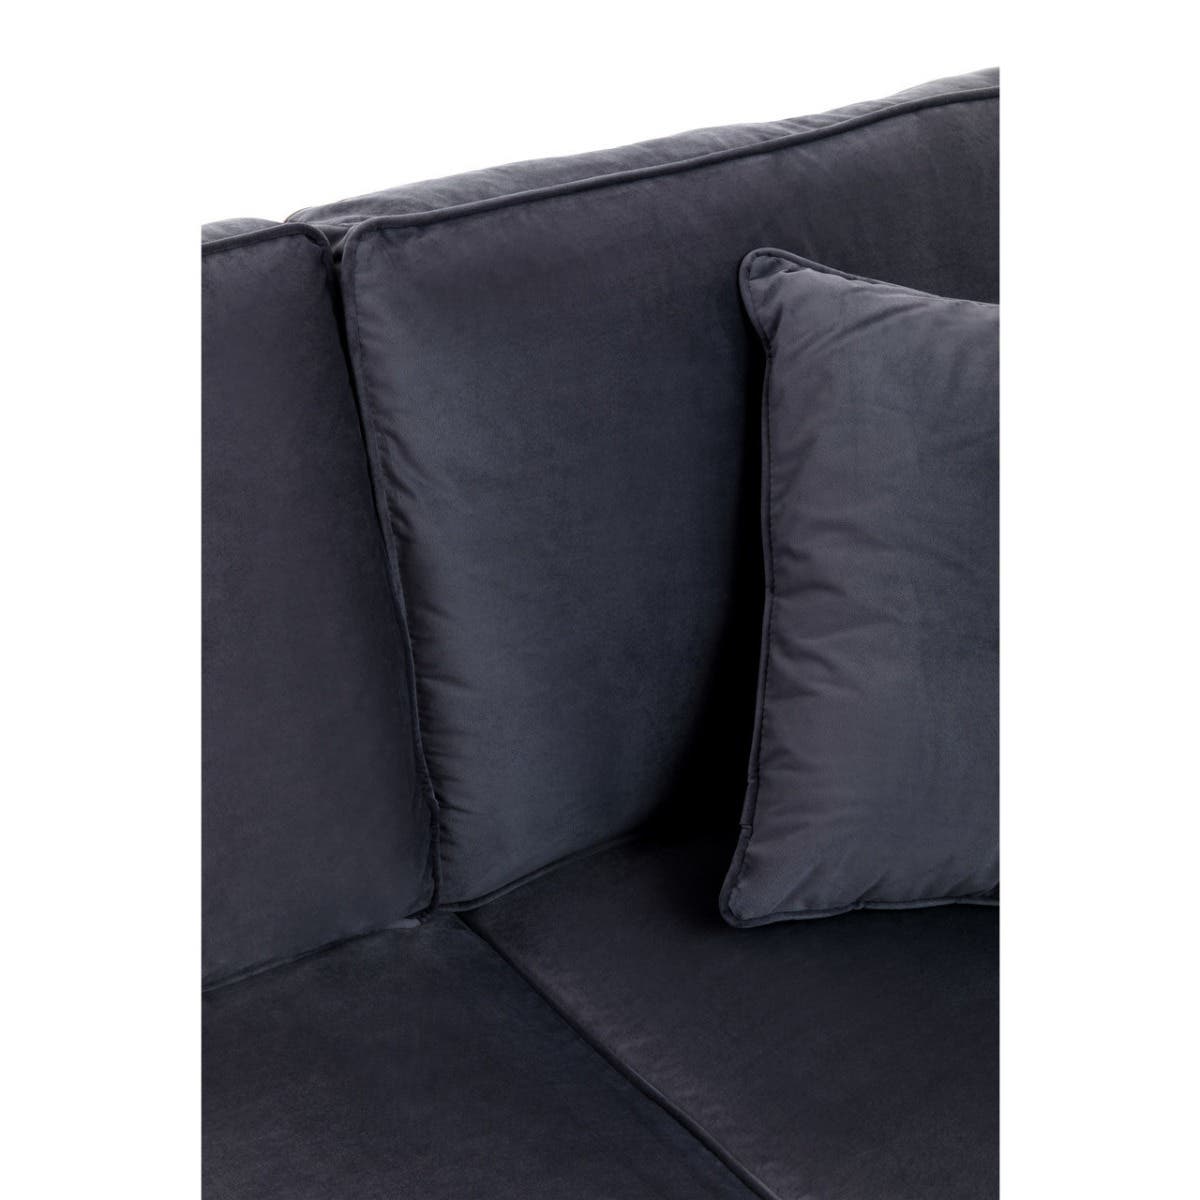 Noosa & Co. Living Ralph Three Seat Black Velvet Sofa House of Isabella UK